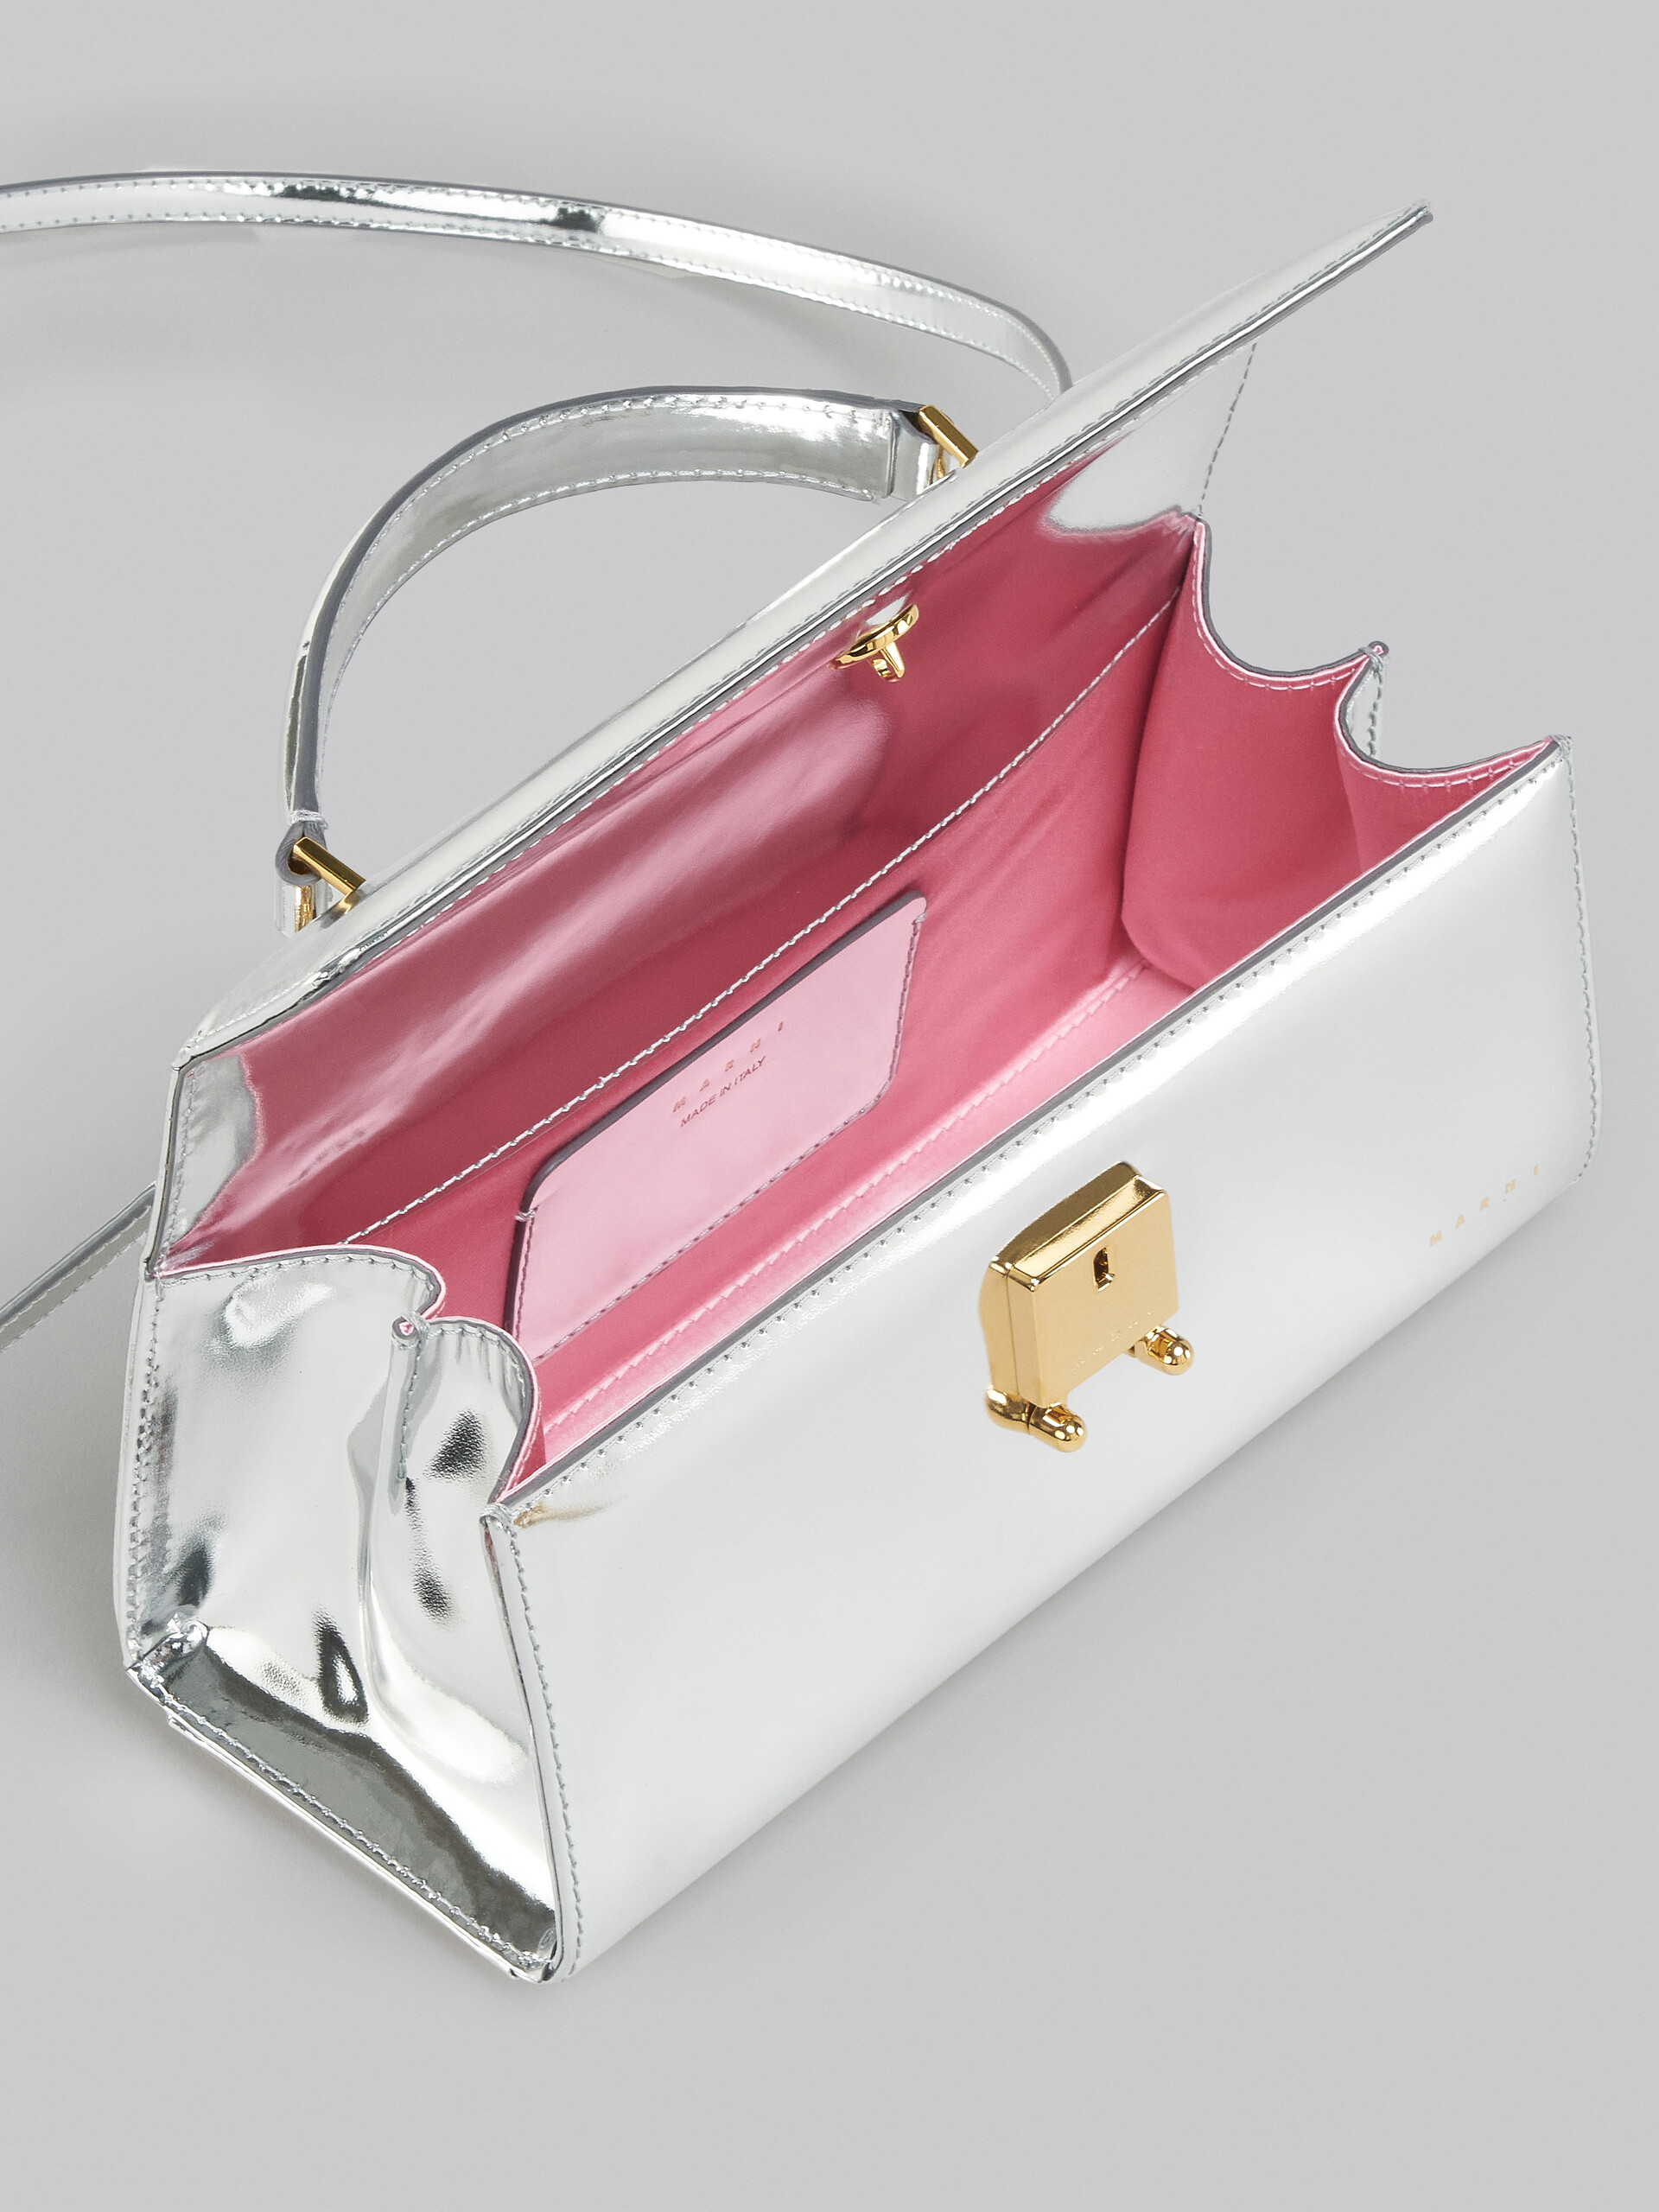 Relativity Medium Bag in silver mirrored leather - Handbags - Image 3